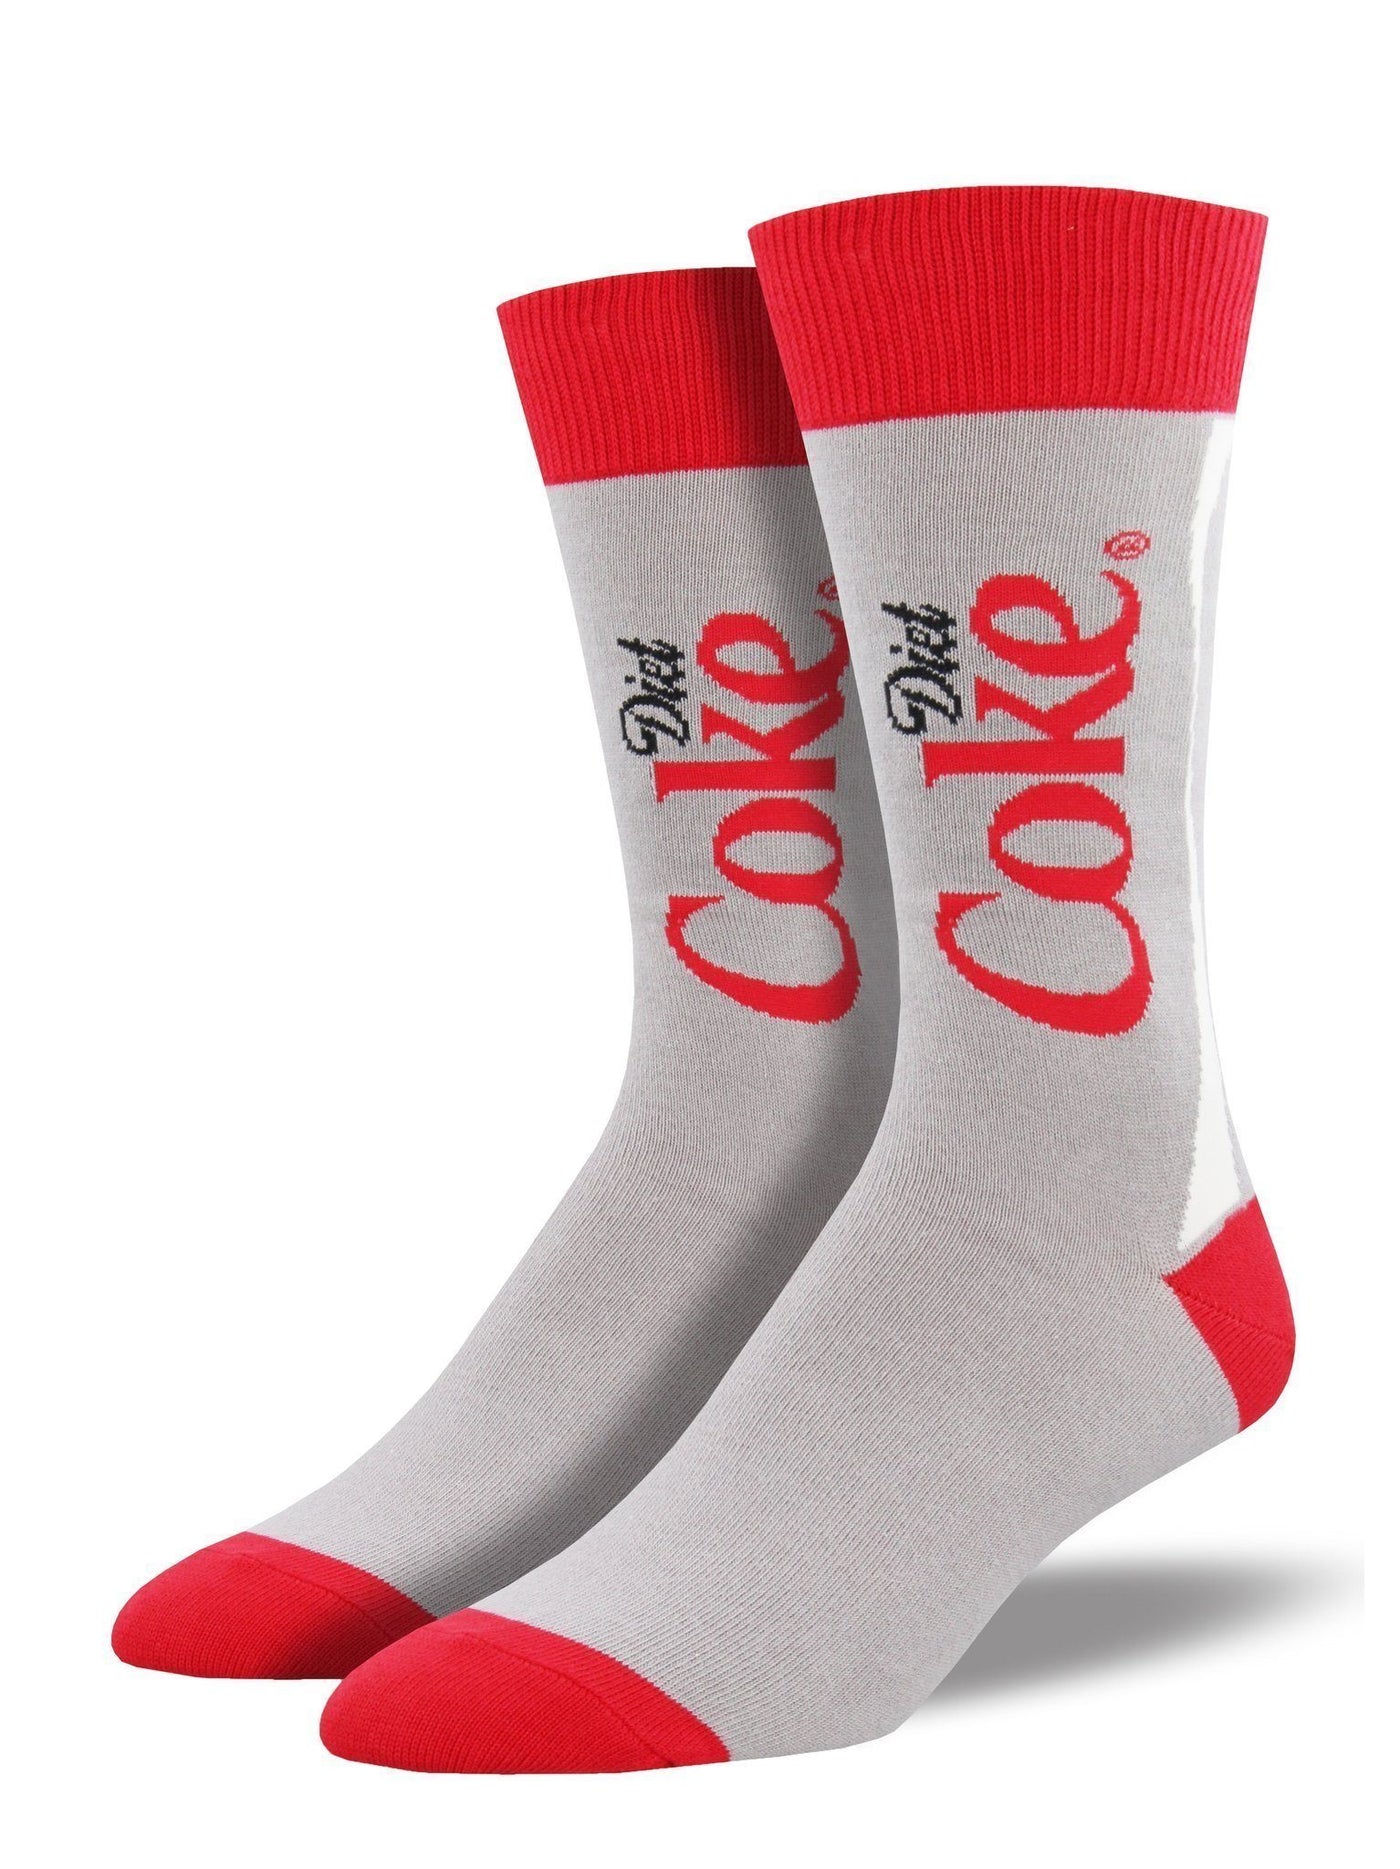 Socksmith - Diet Coke Crew Socks | Men's - Knock Your Socks Off